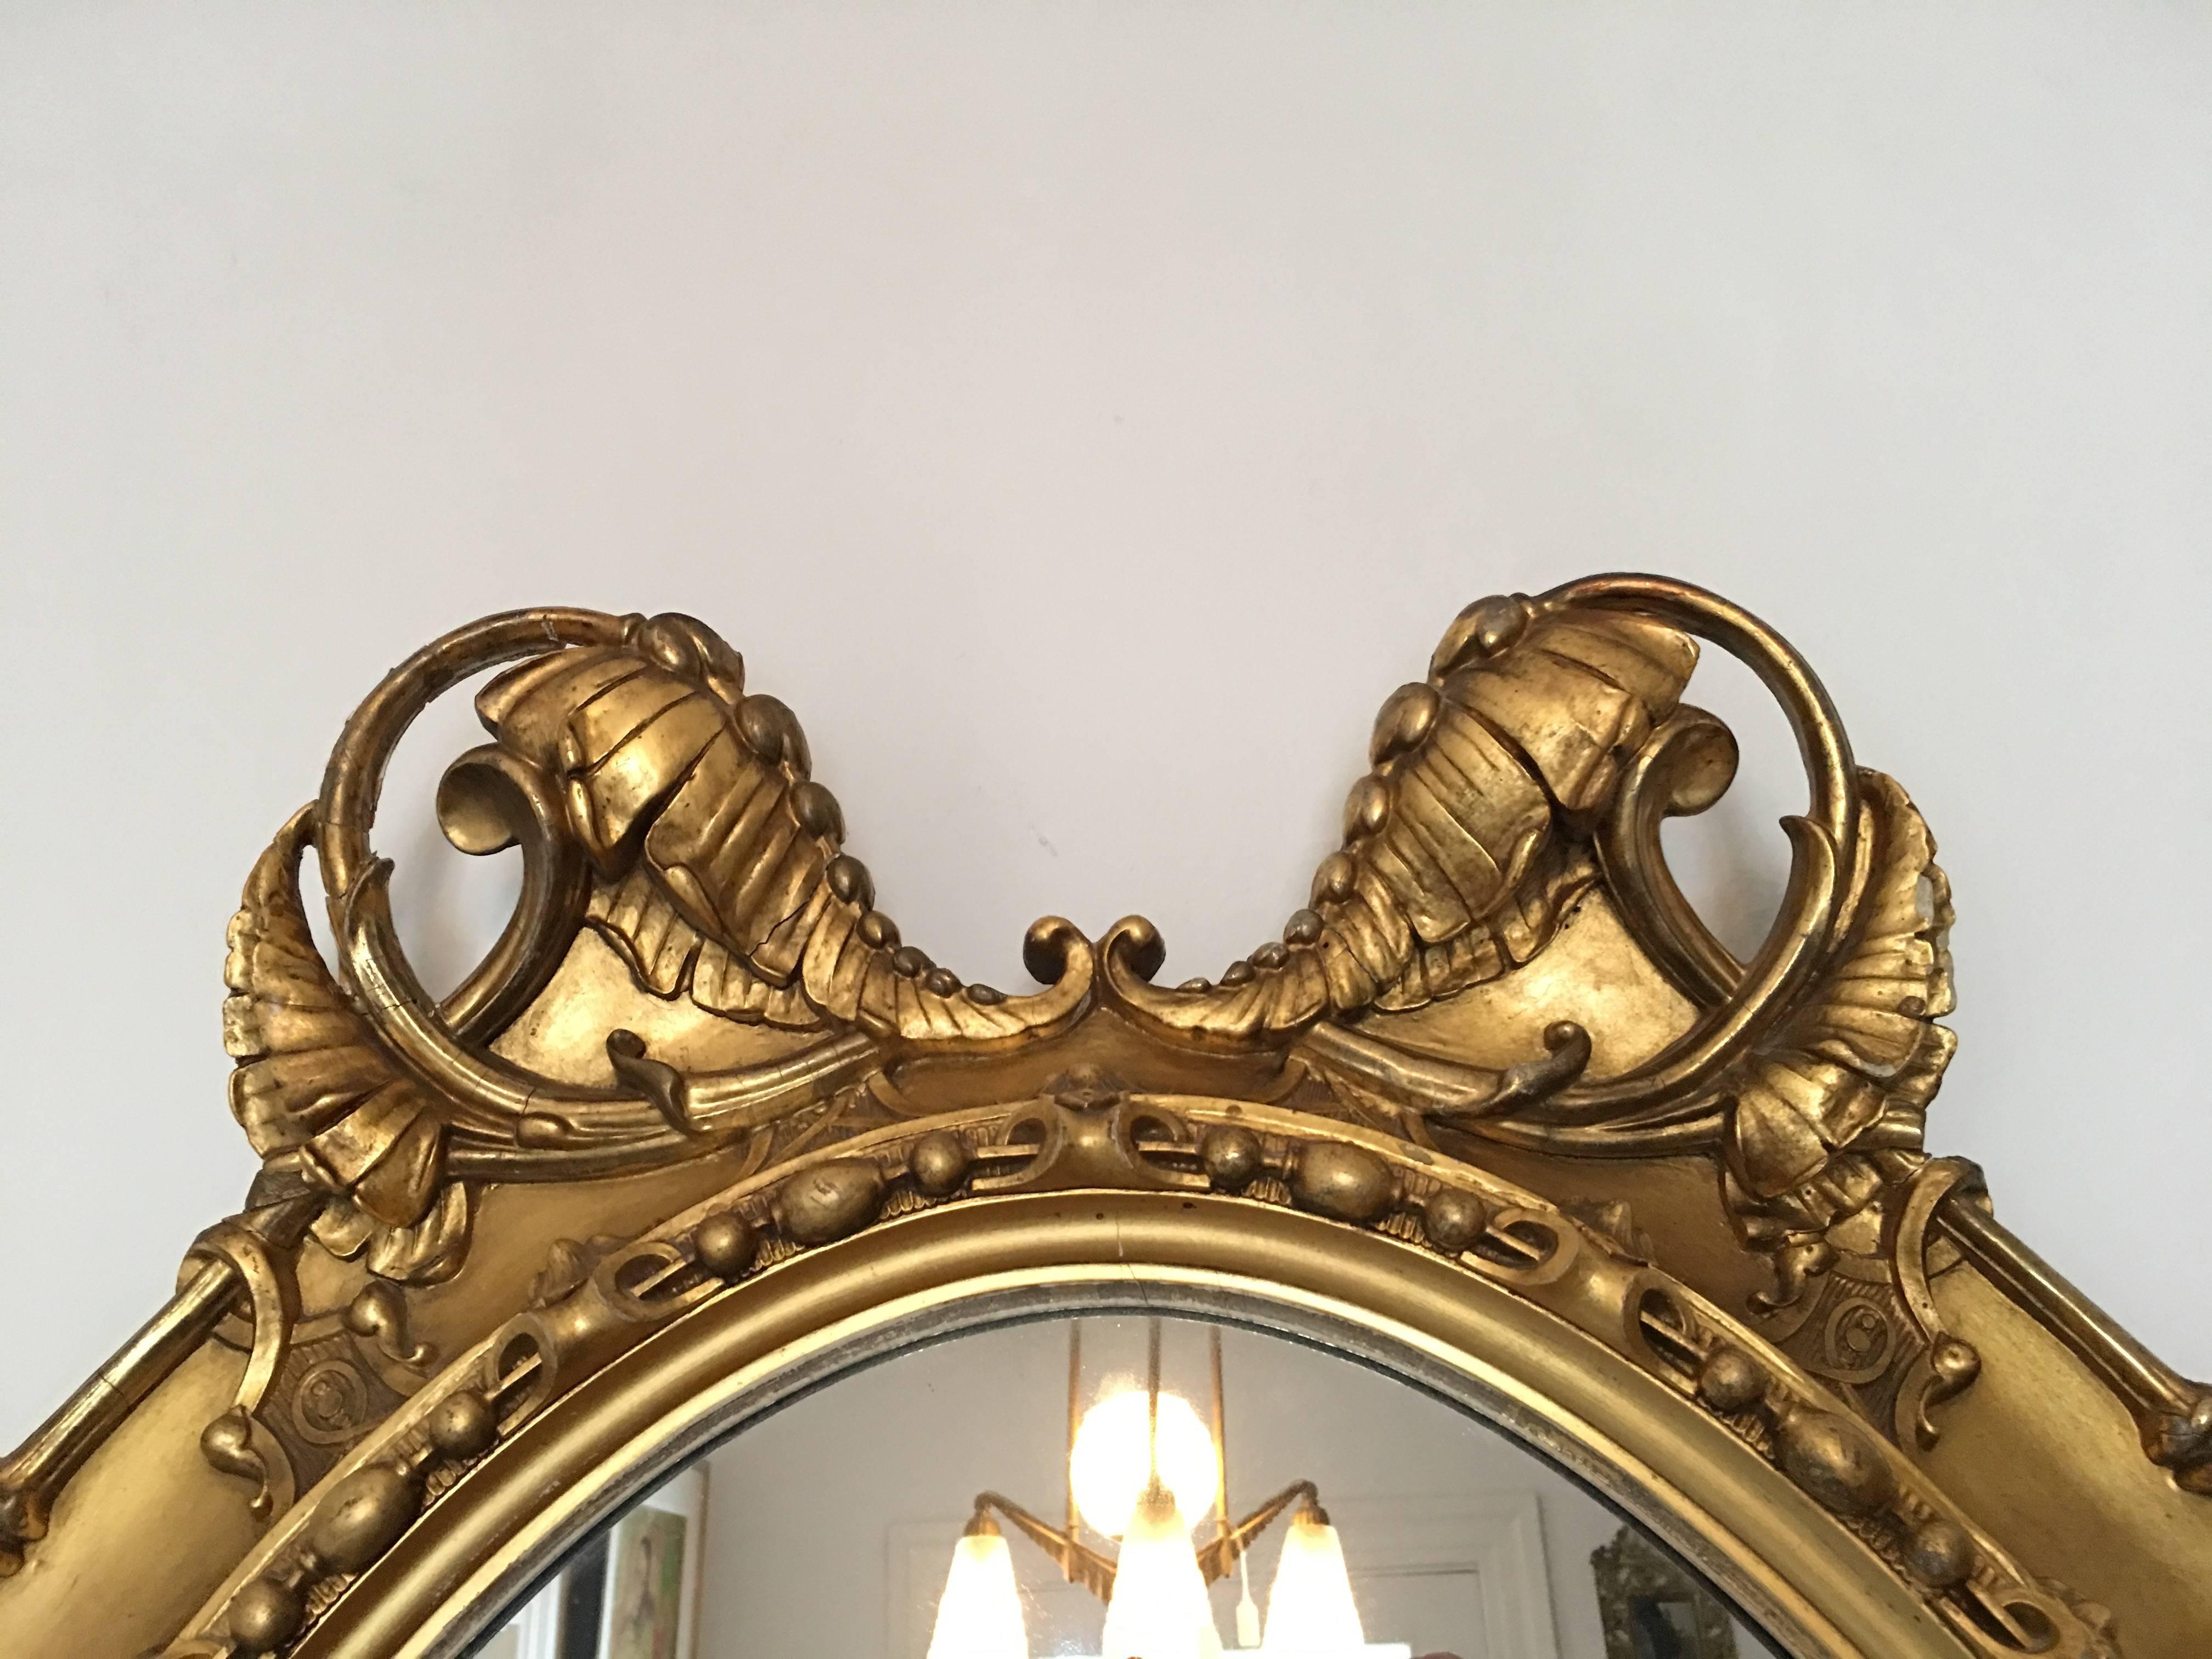 Beautiful 19th century Victorian giltwood handing mirror

Measures 61